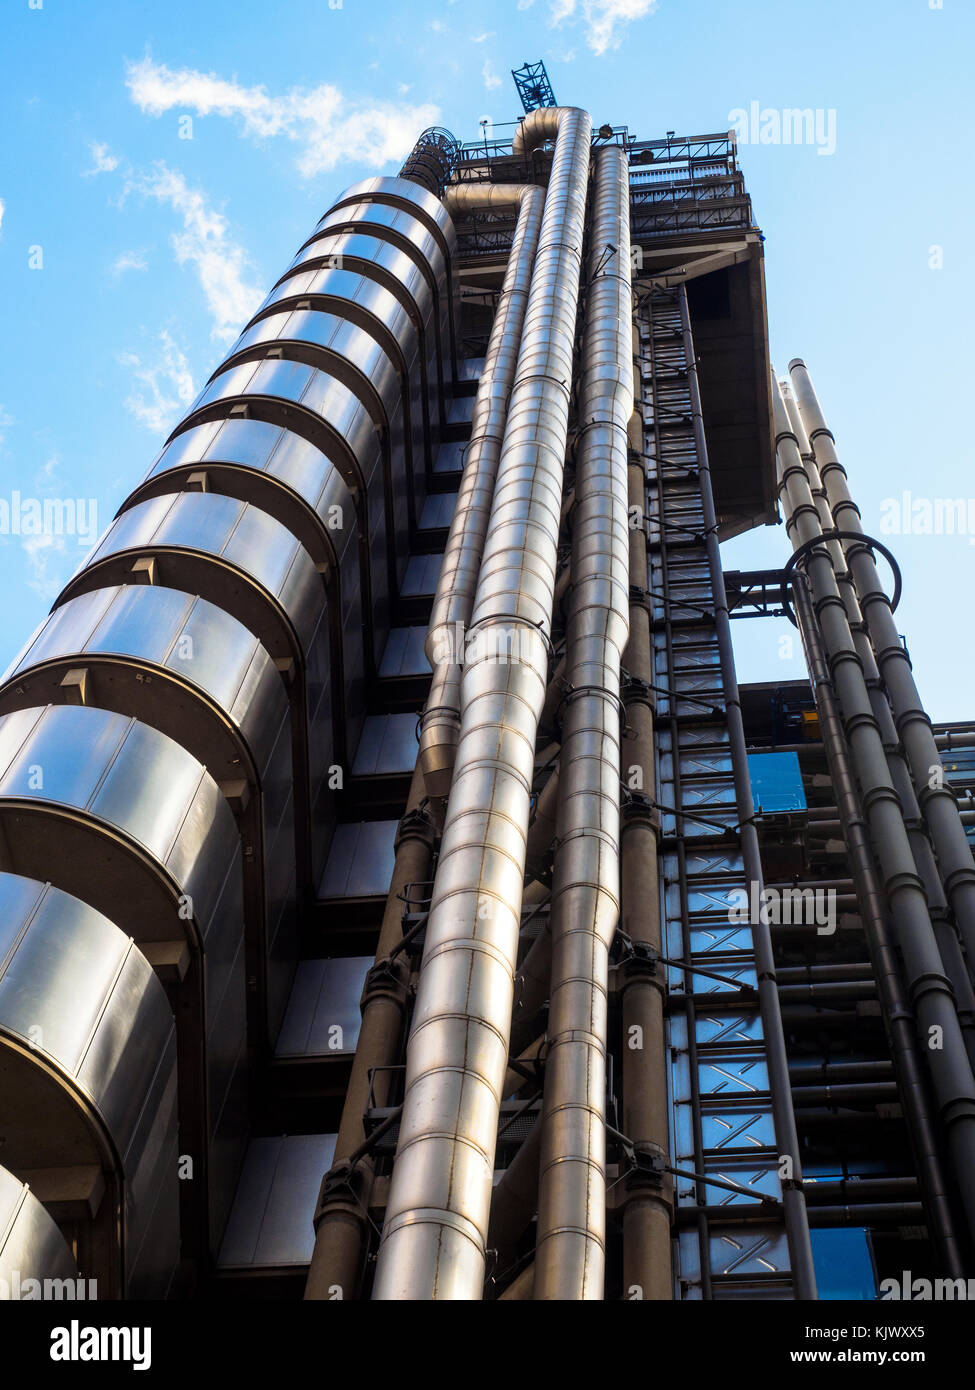 Dettagli architettonici del Lloyds of London building - Londra, Inghilterra Foto Stock